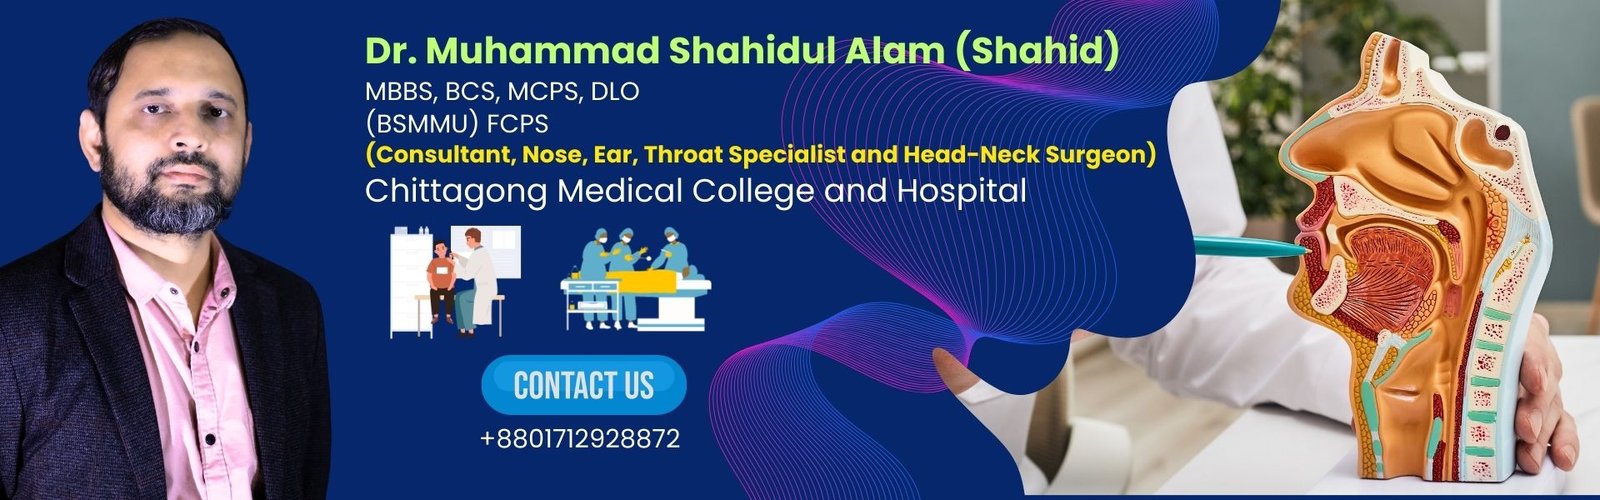 Dr. Mohammad Shahidul Alam (Shahid) Dekstop 5